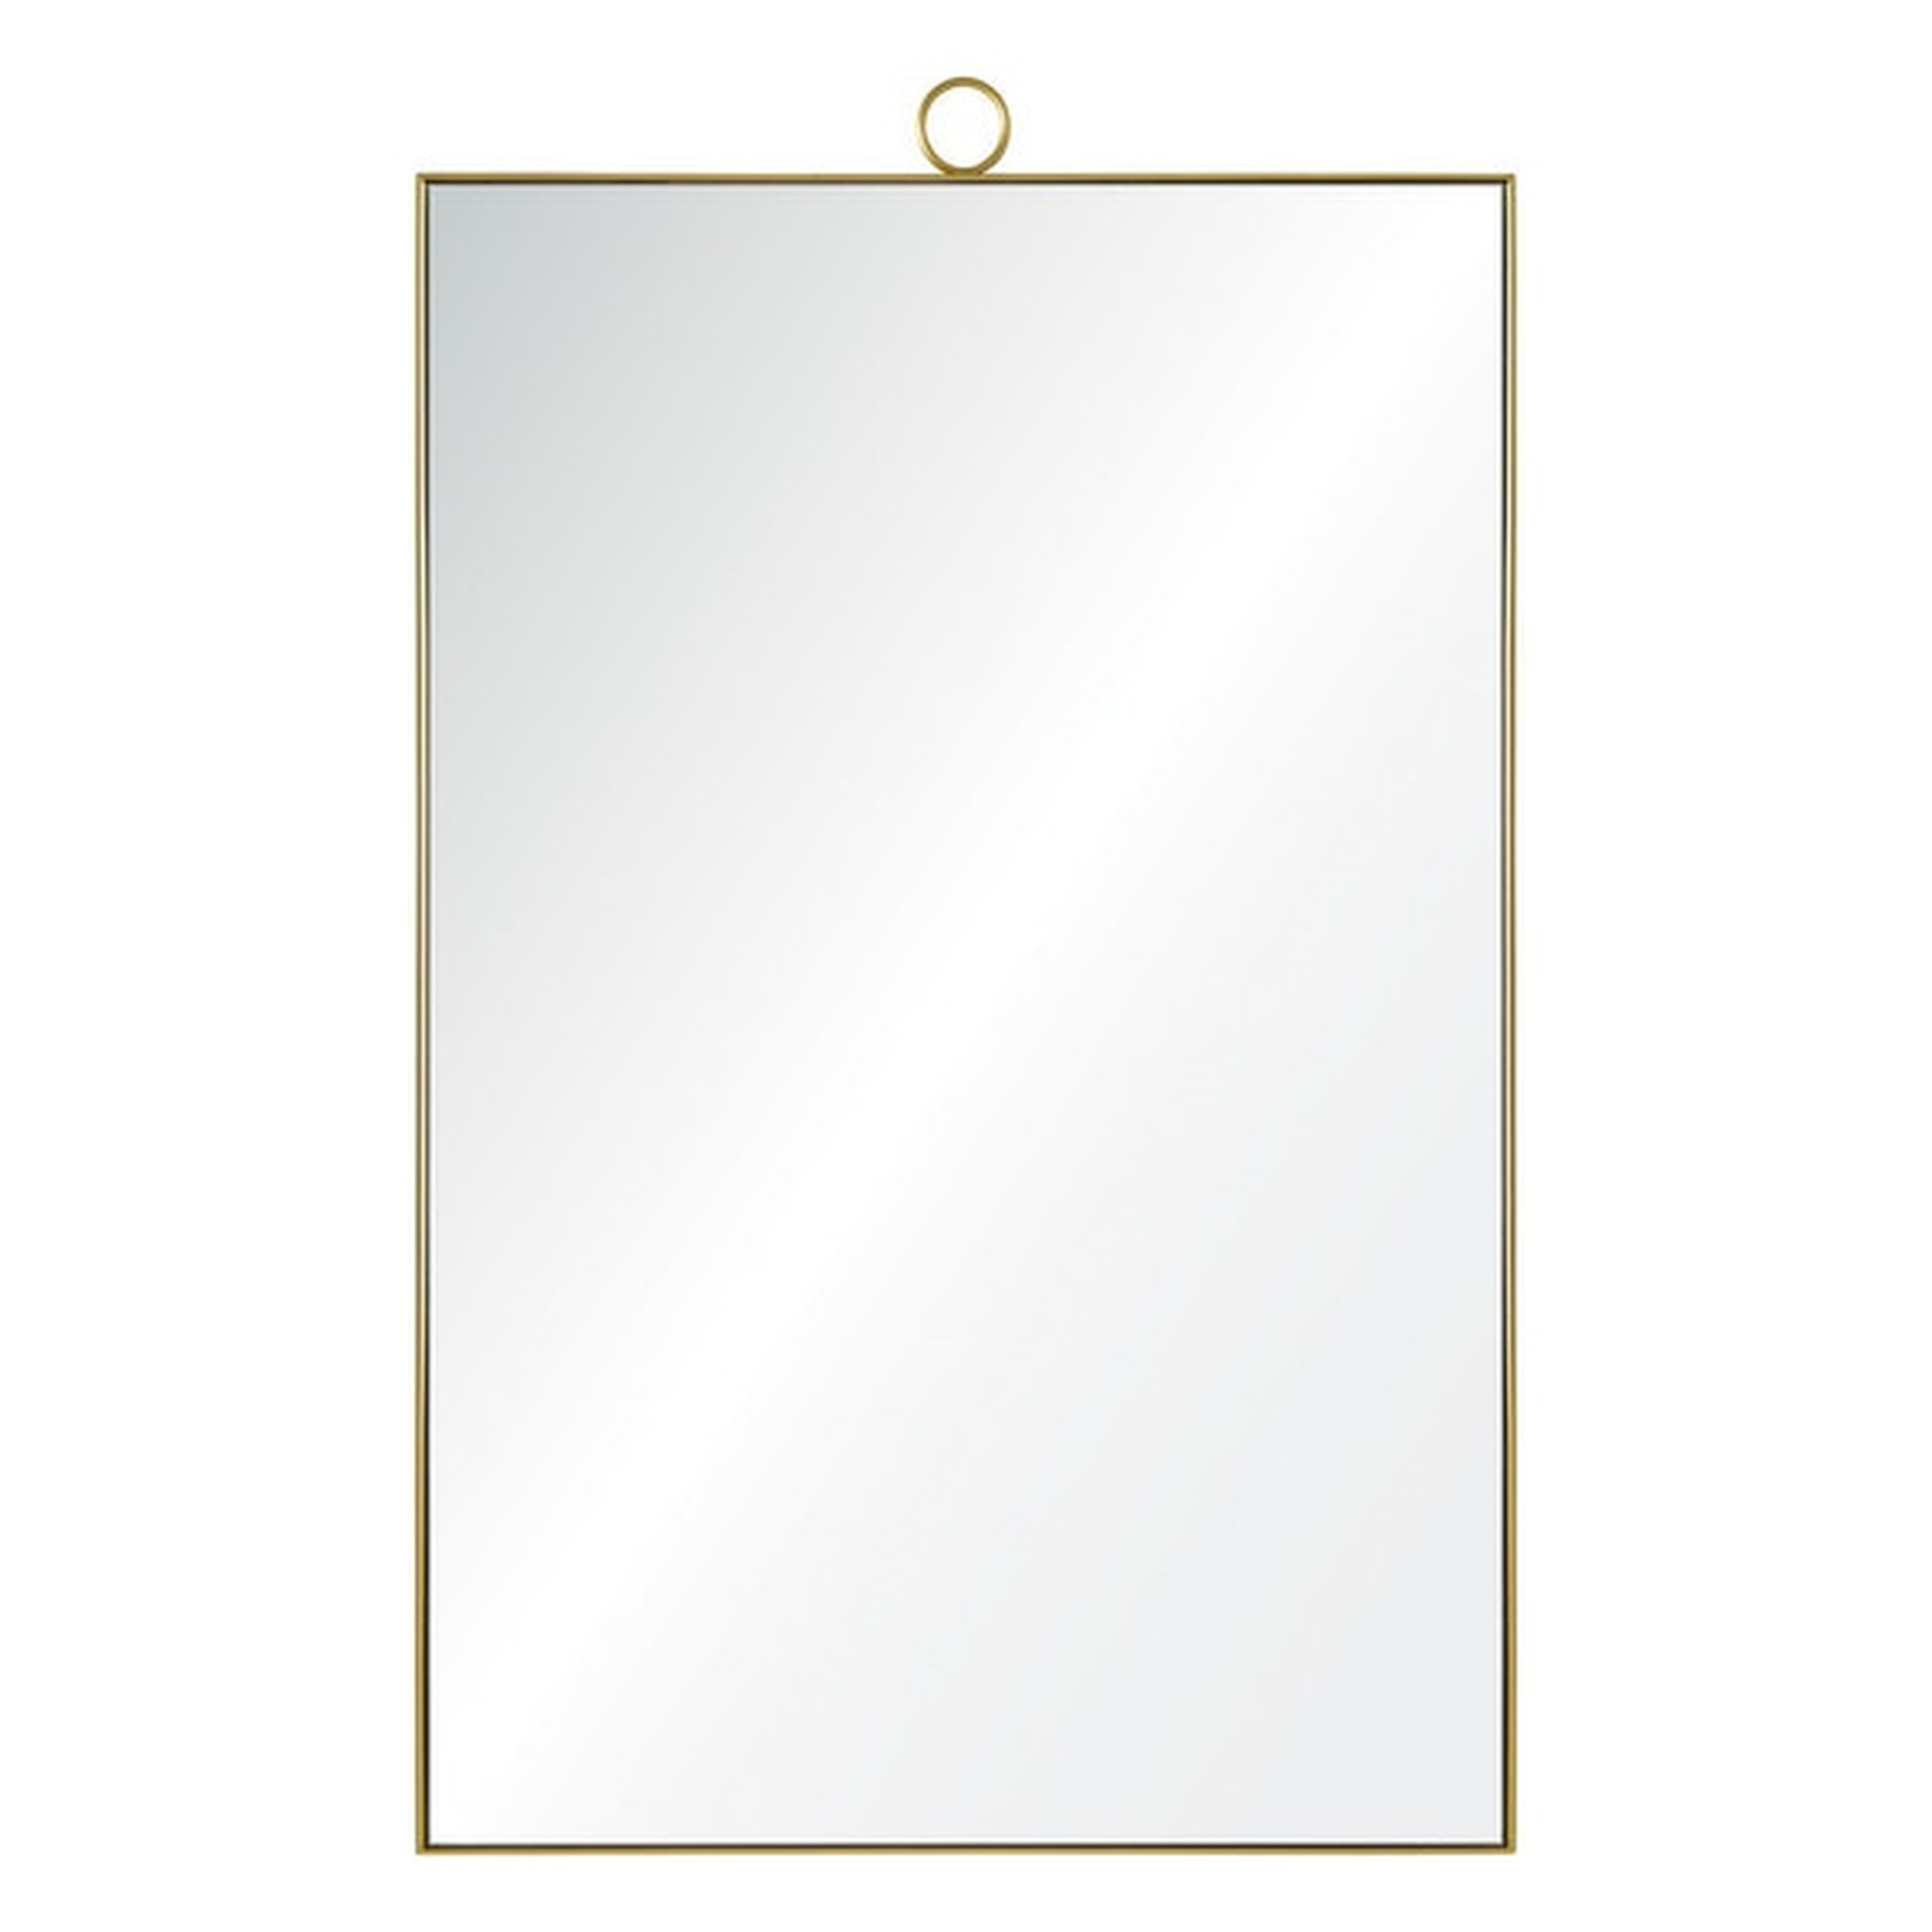 Mendavia Framed Rectangular Wall Mirror - Overstock